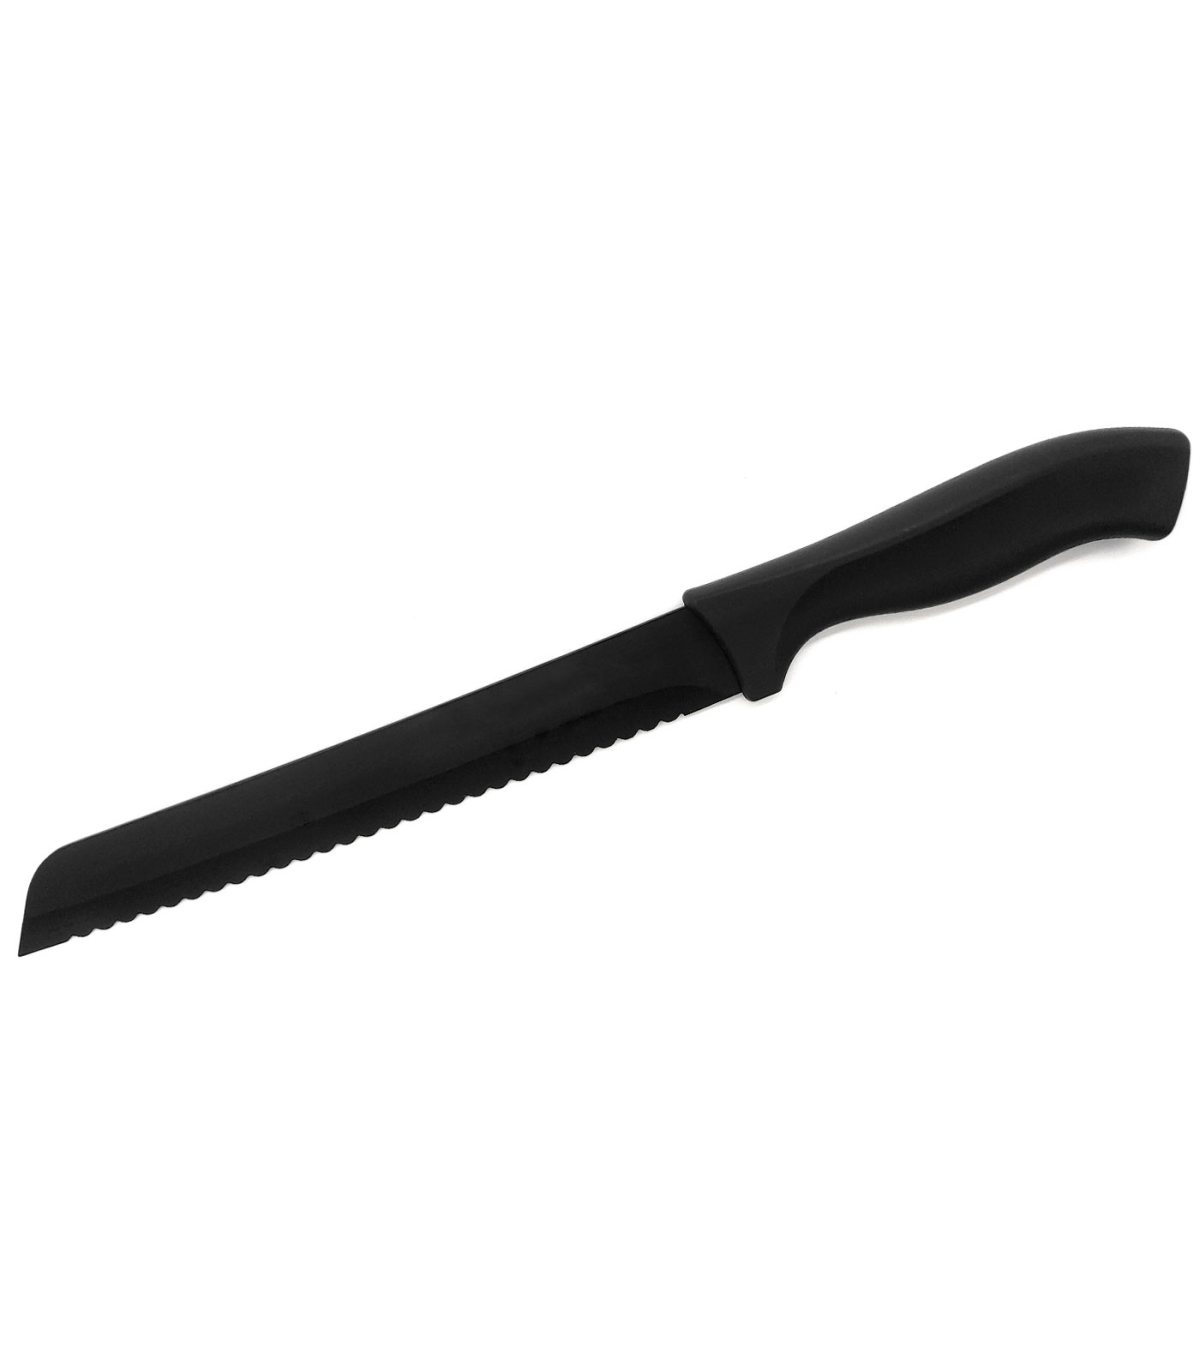 Tradineur - Cuchillo pan, cuchillo panero profesional con hoja serrada de 20  cm y mango ergonómico de plástico, corte preciso, c